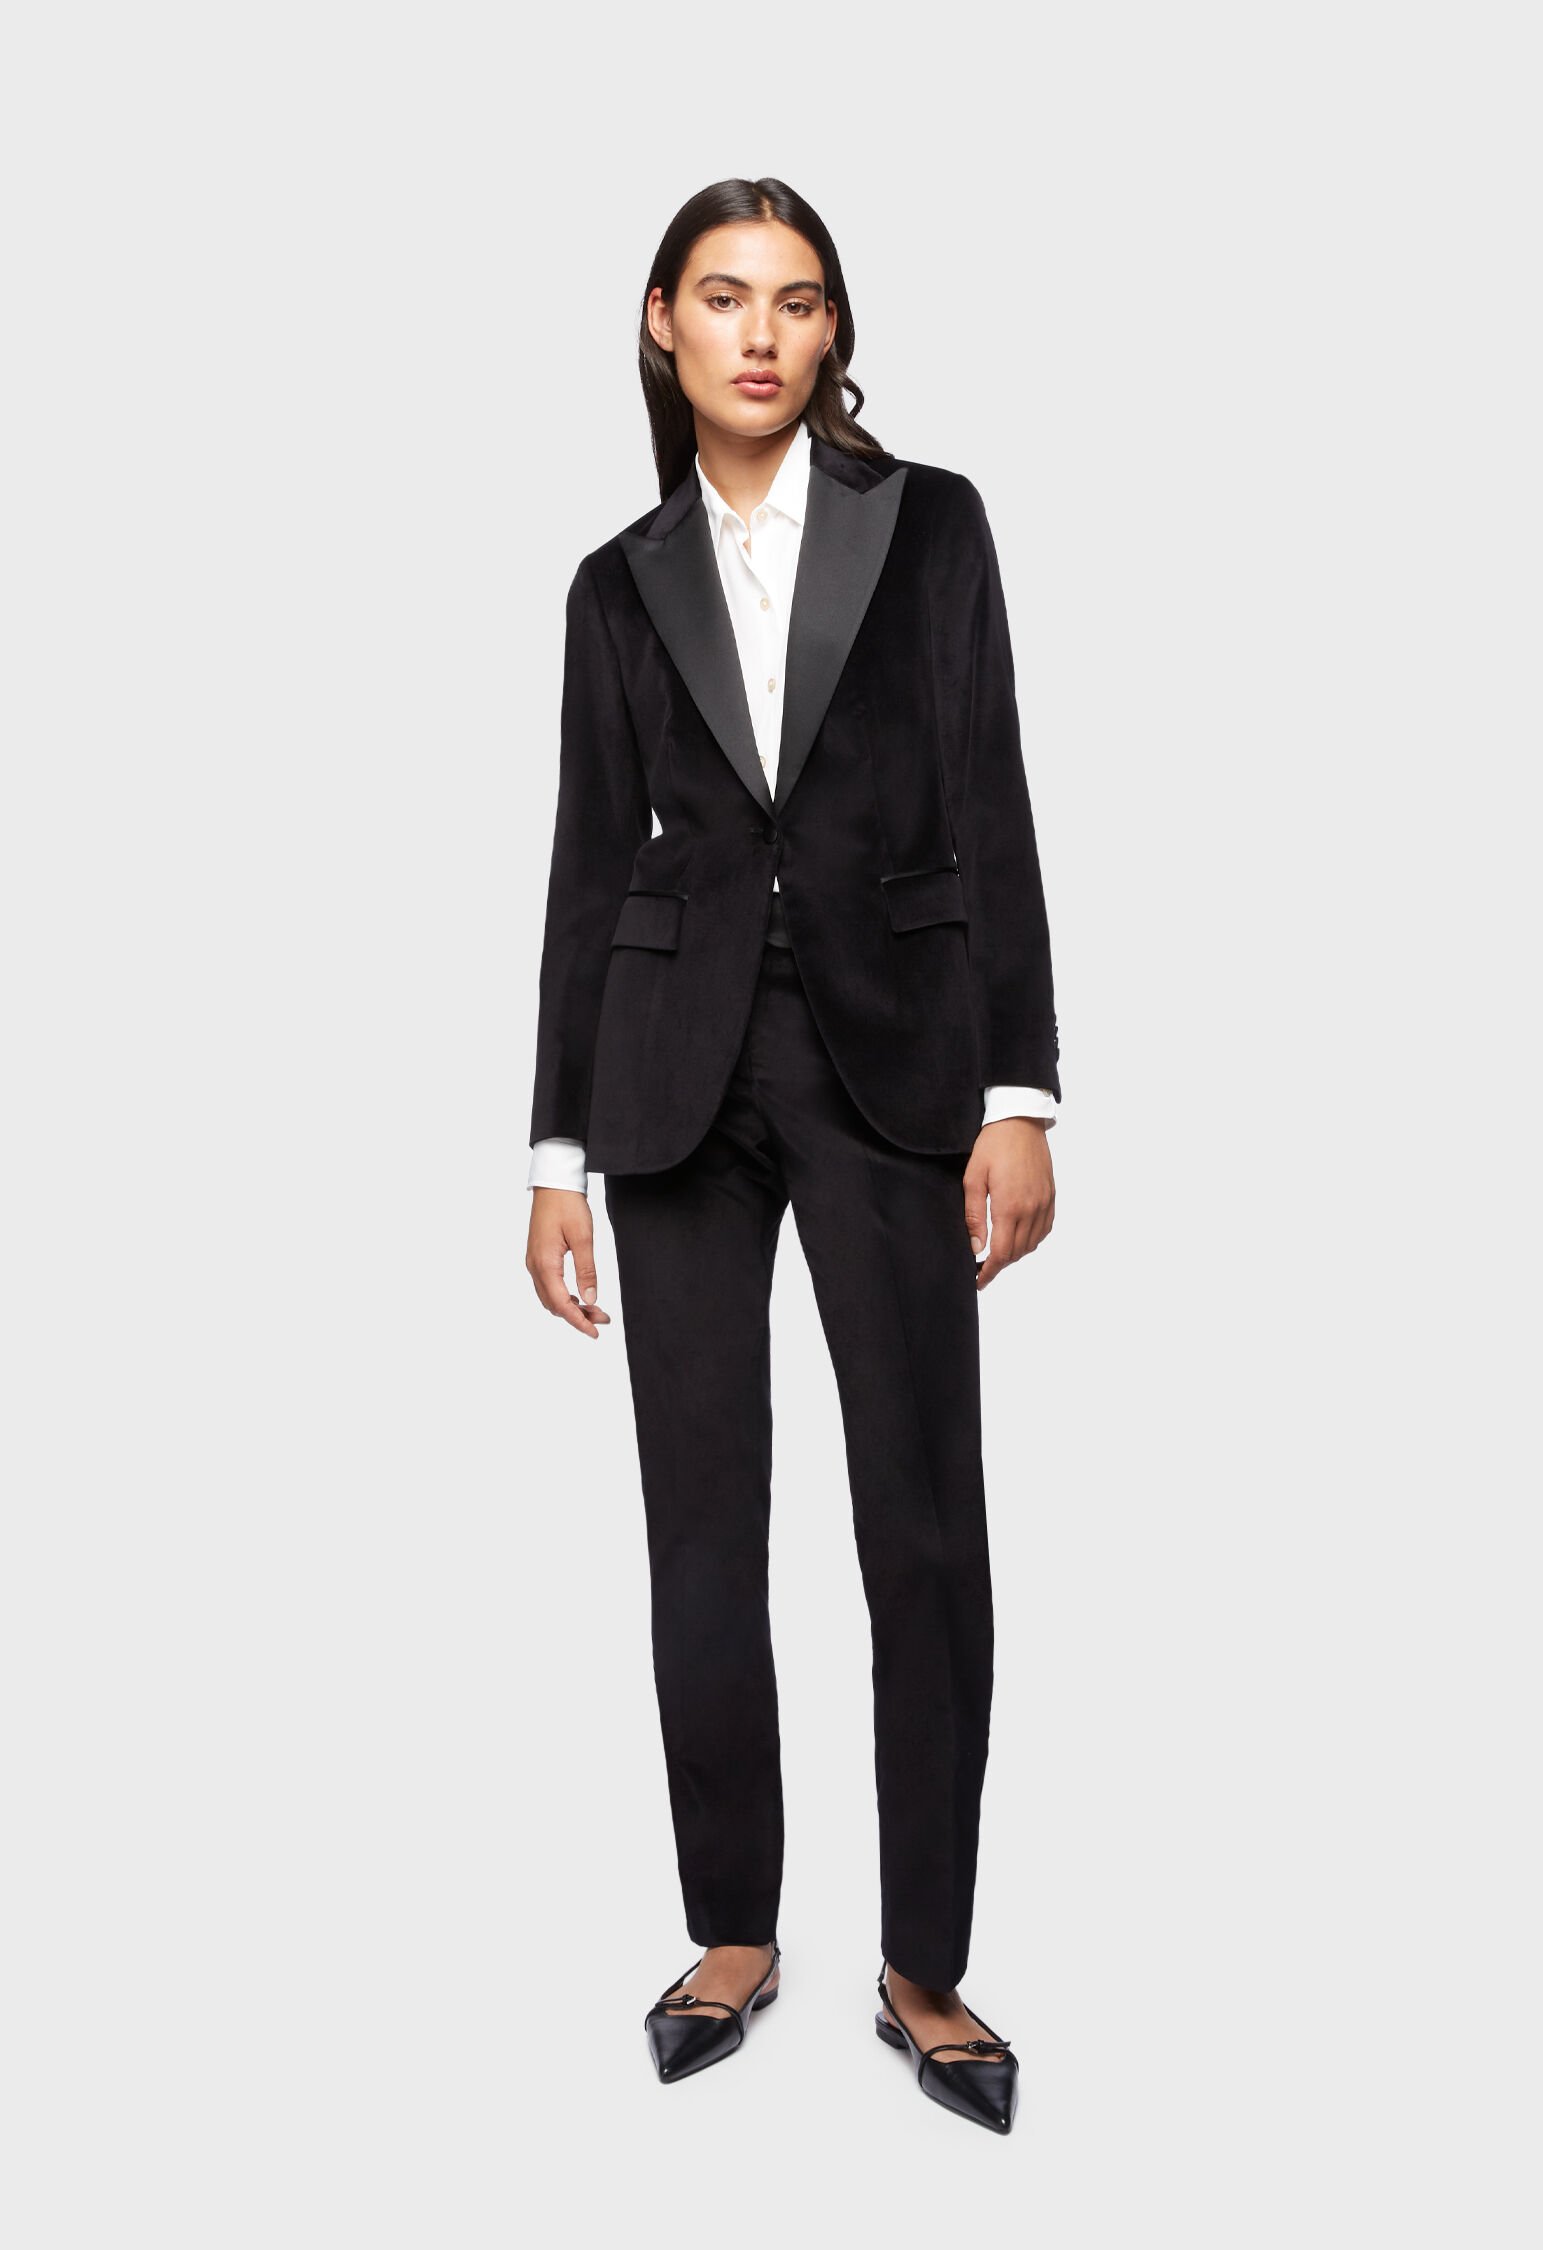 Office Lady Women Velvet Blazer Jacket Long Trousers 2Pcs Suit Dress Party  Warm | eBay